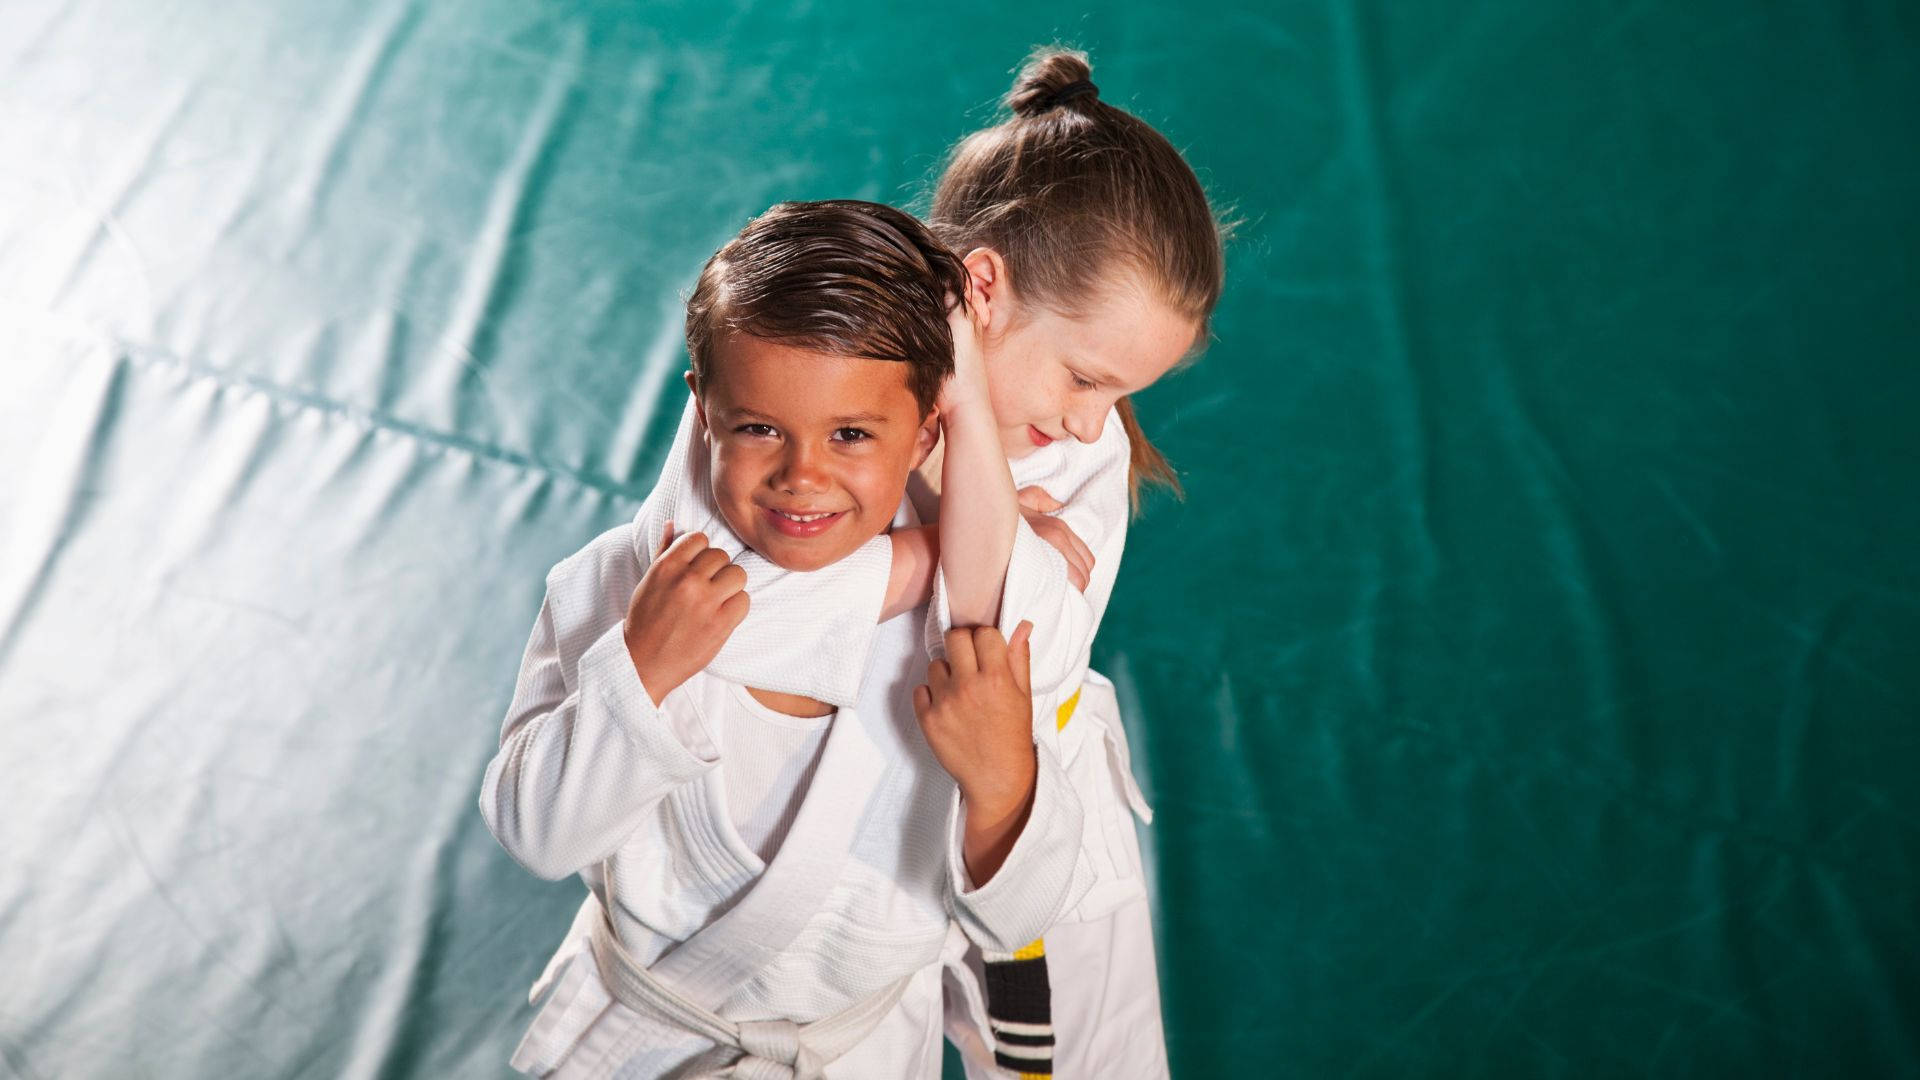 Brazilian Jiu-jitsu Martial Arts Kids Sports